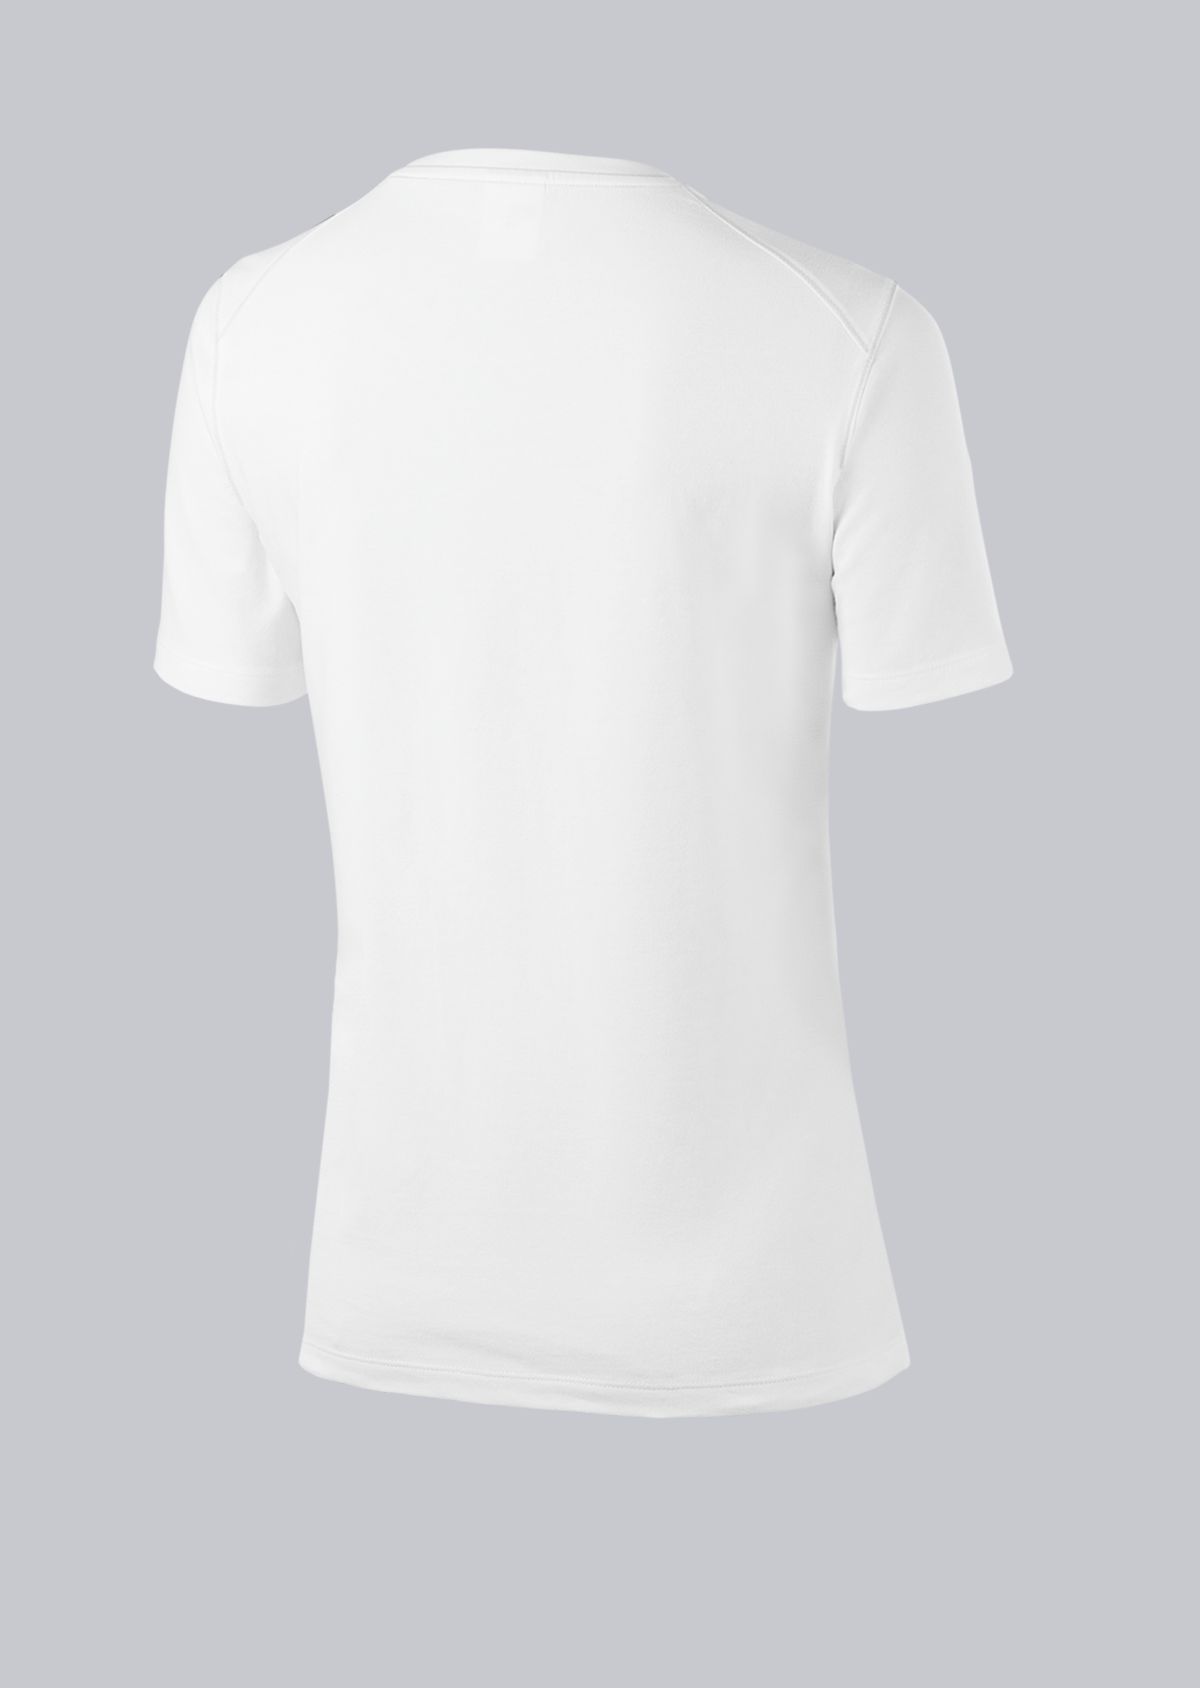 BP® T-Shirt für Damen